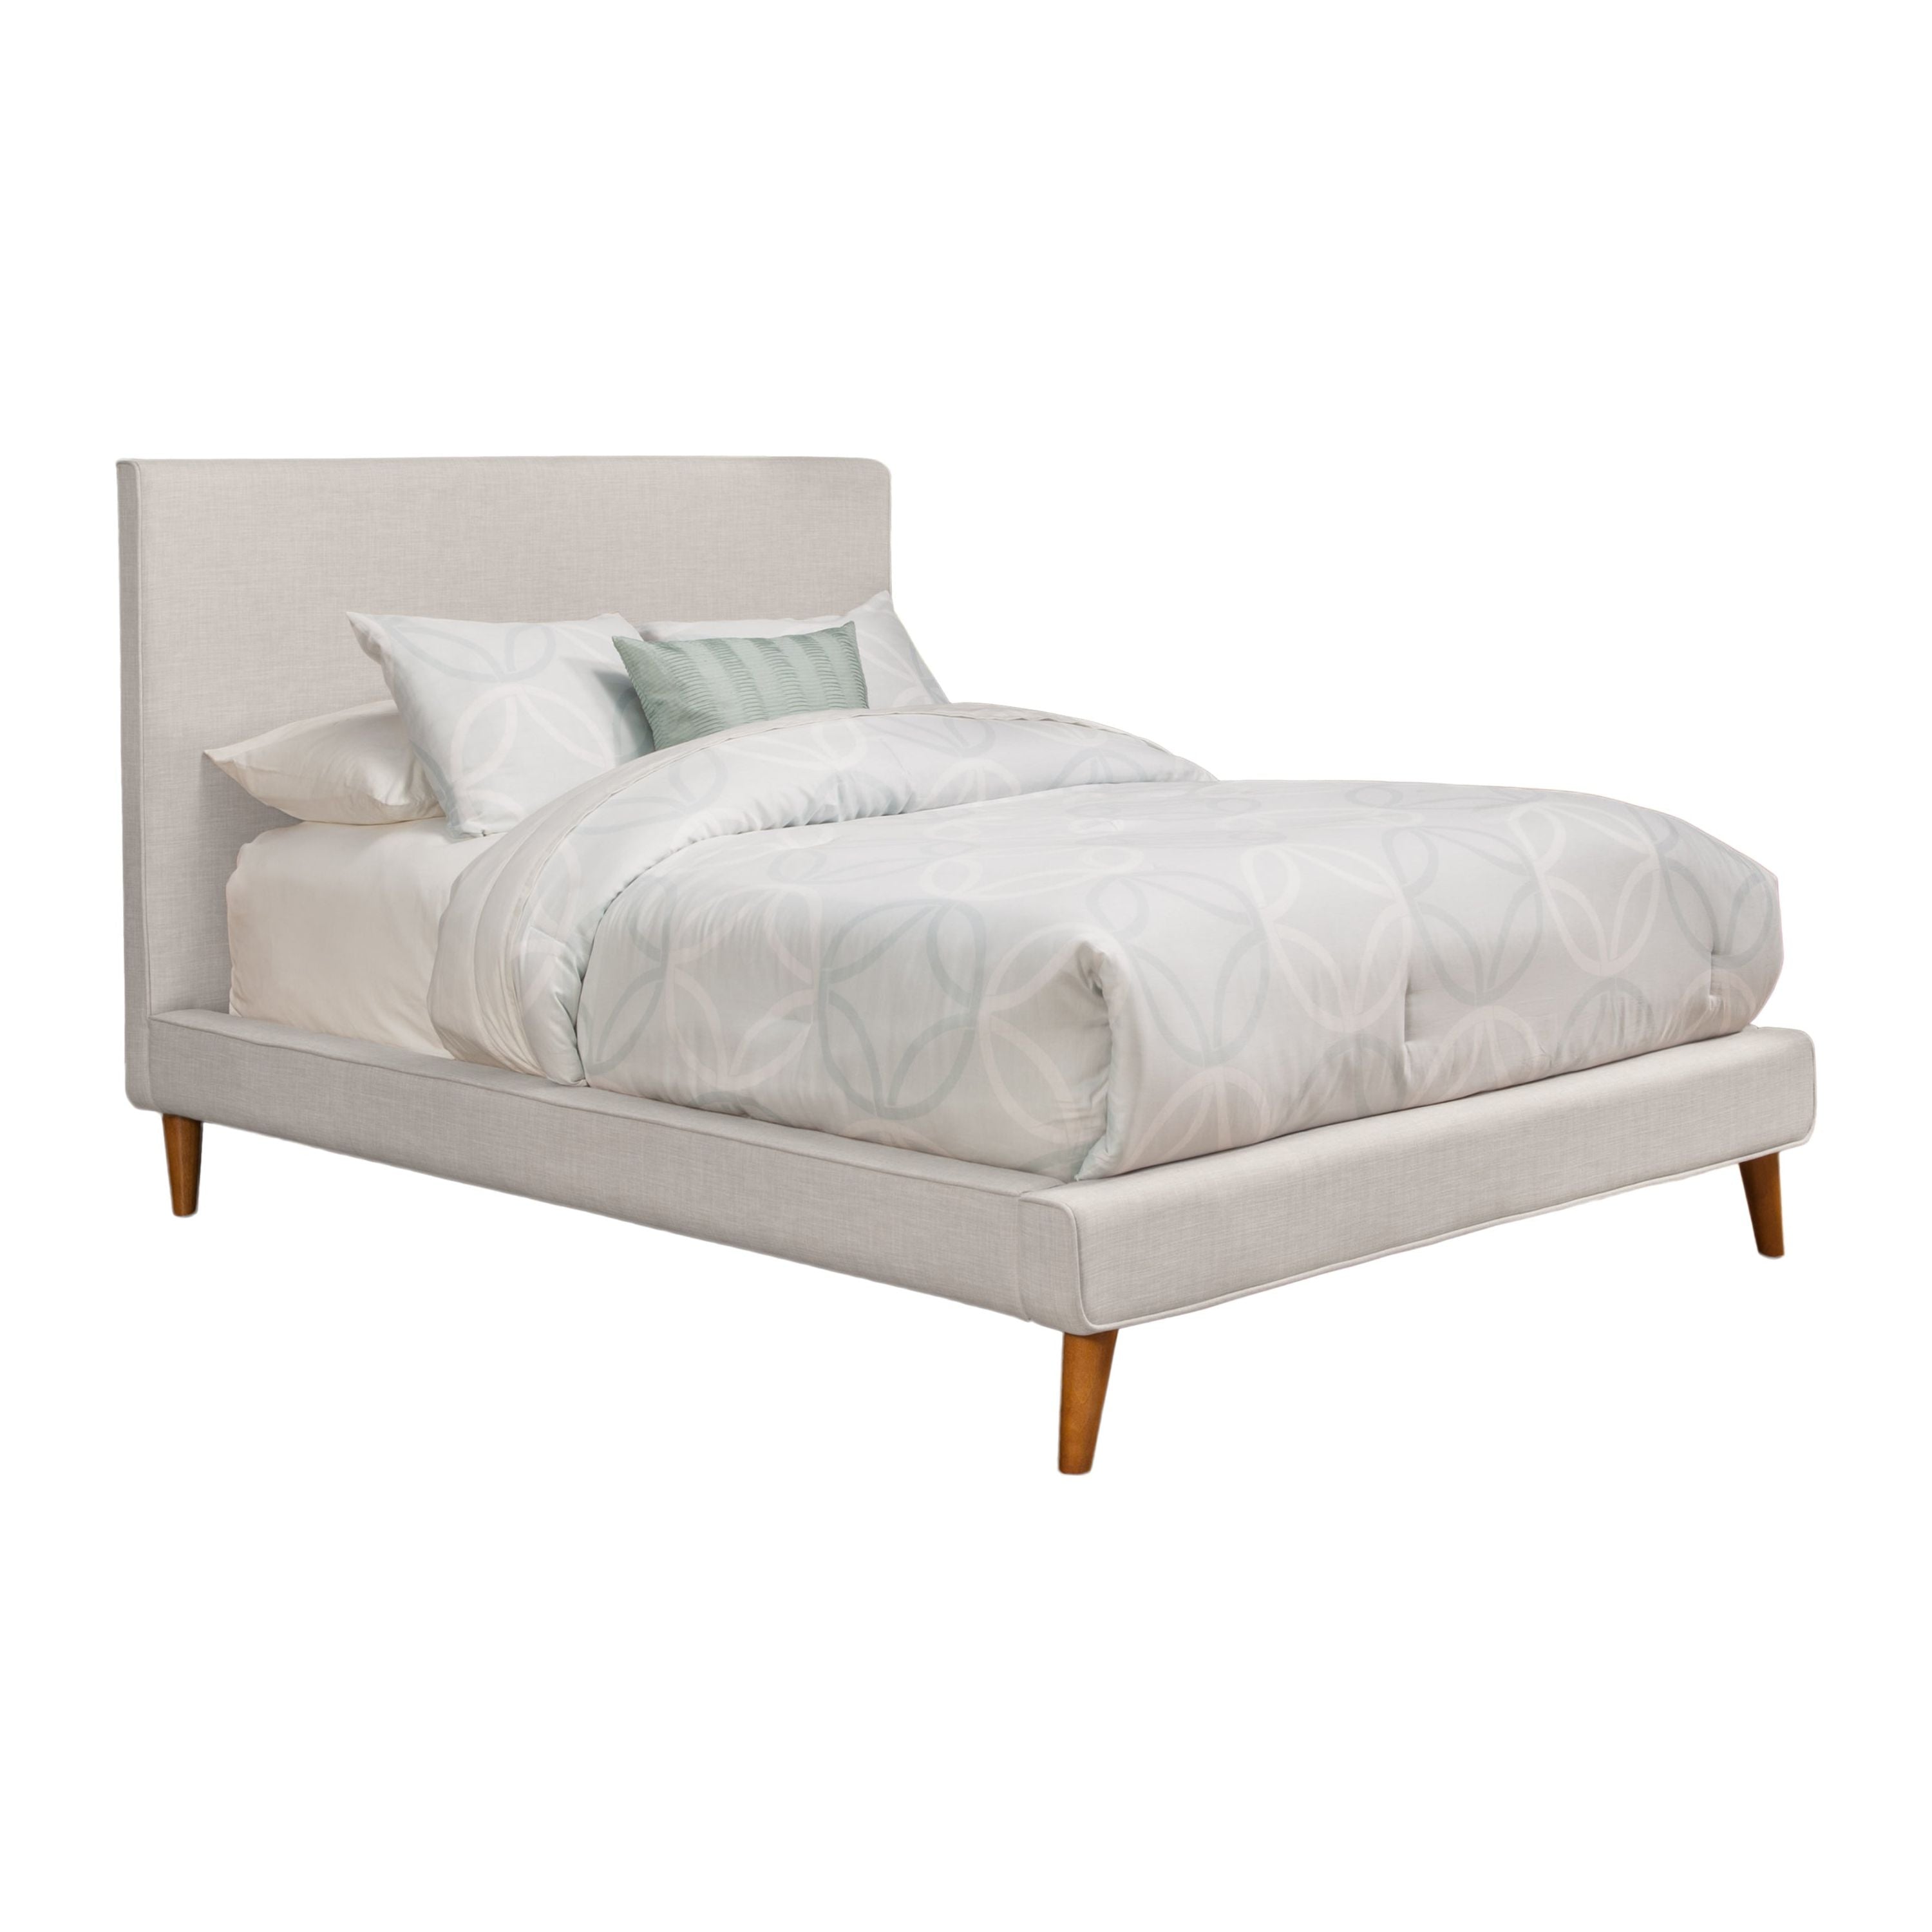 Britney Bed, Light Grey Linen